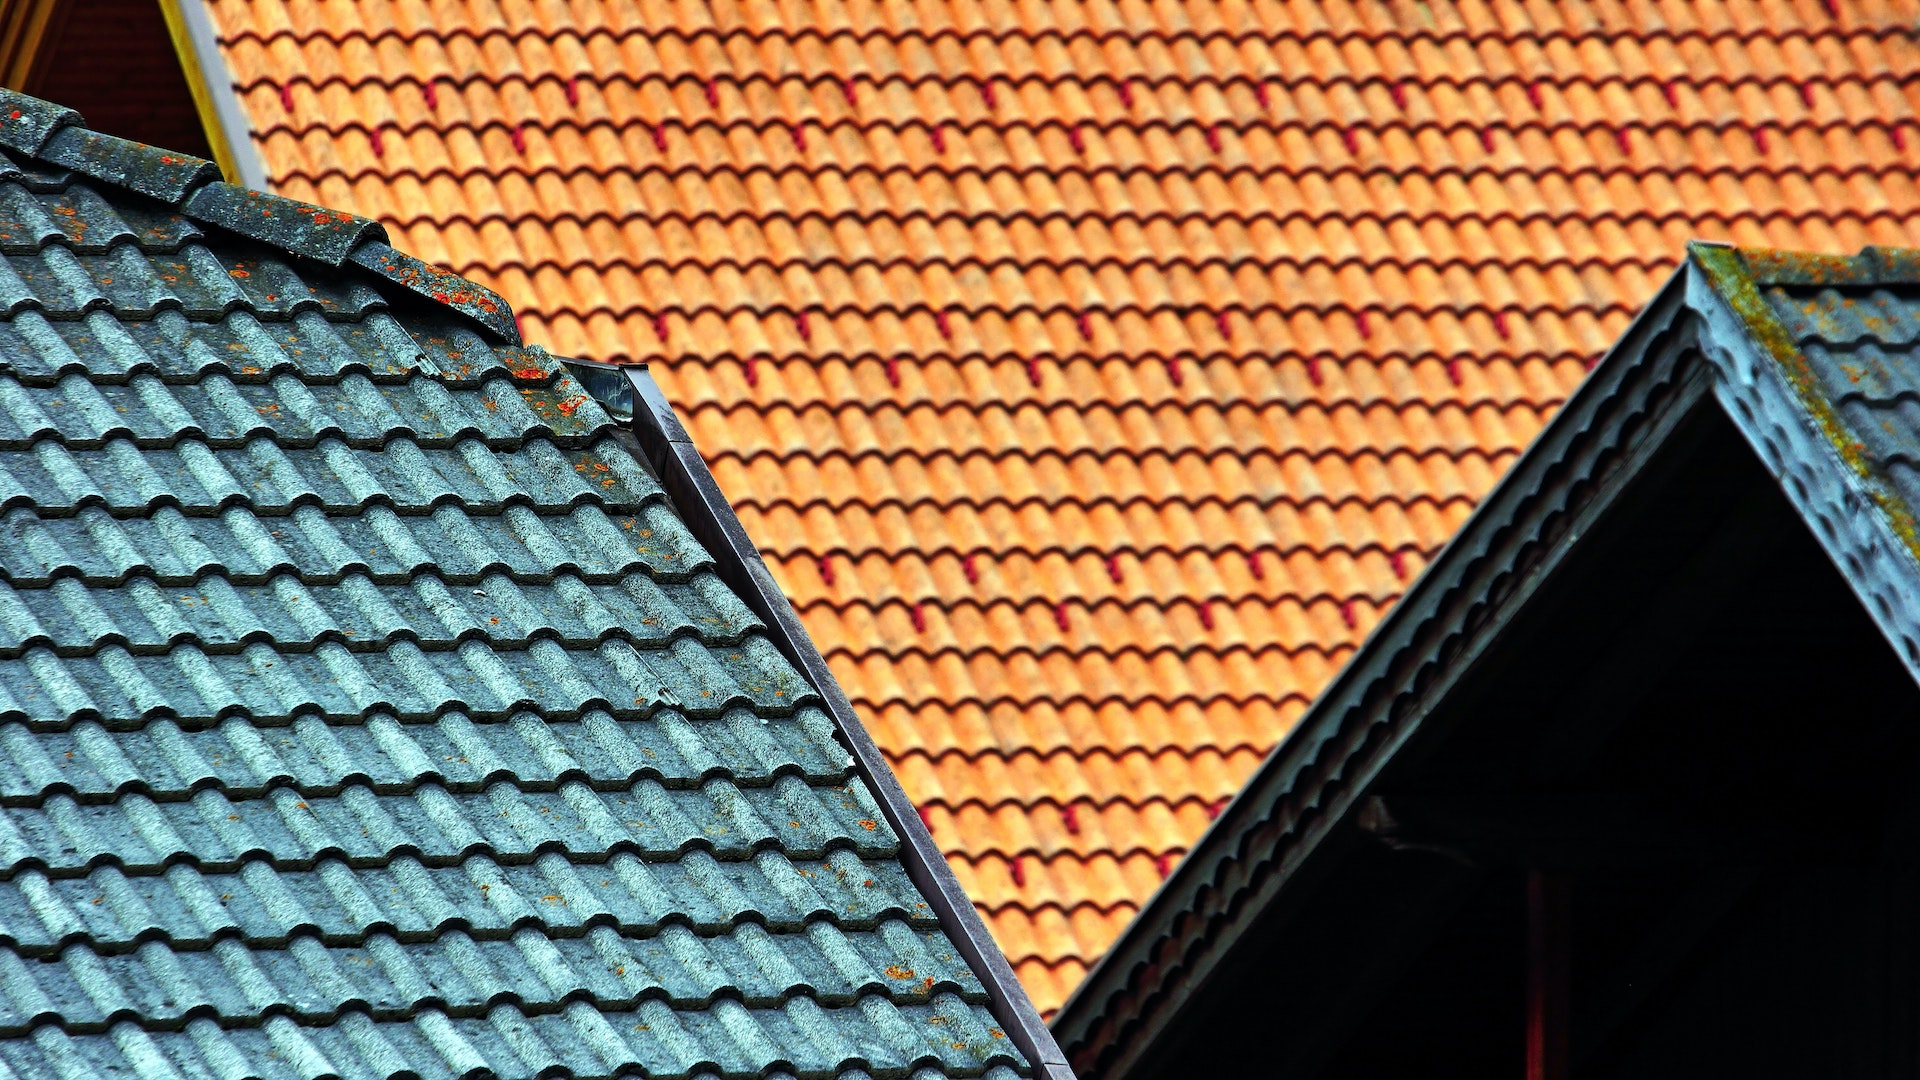 Blue and orange tiled roof